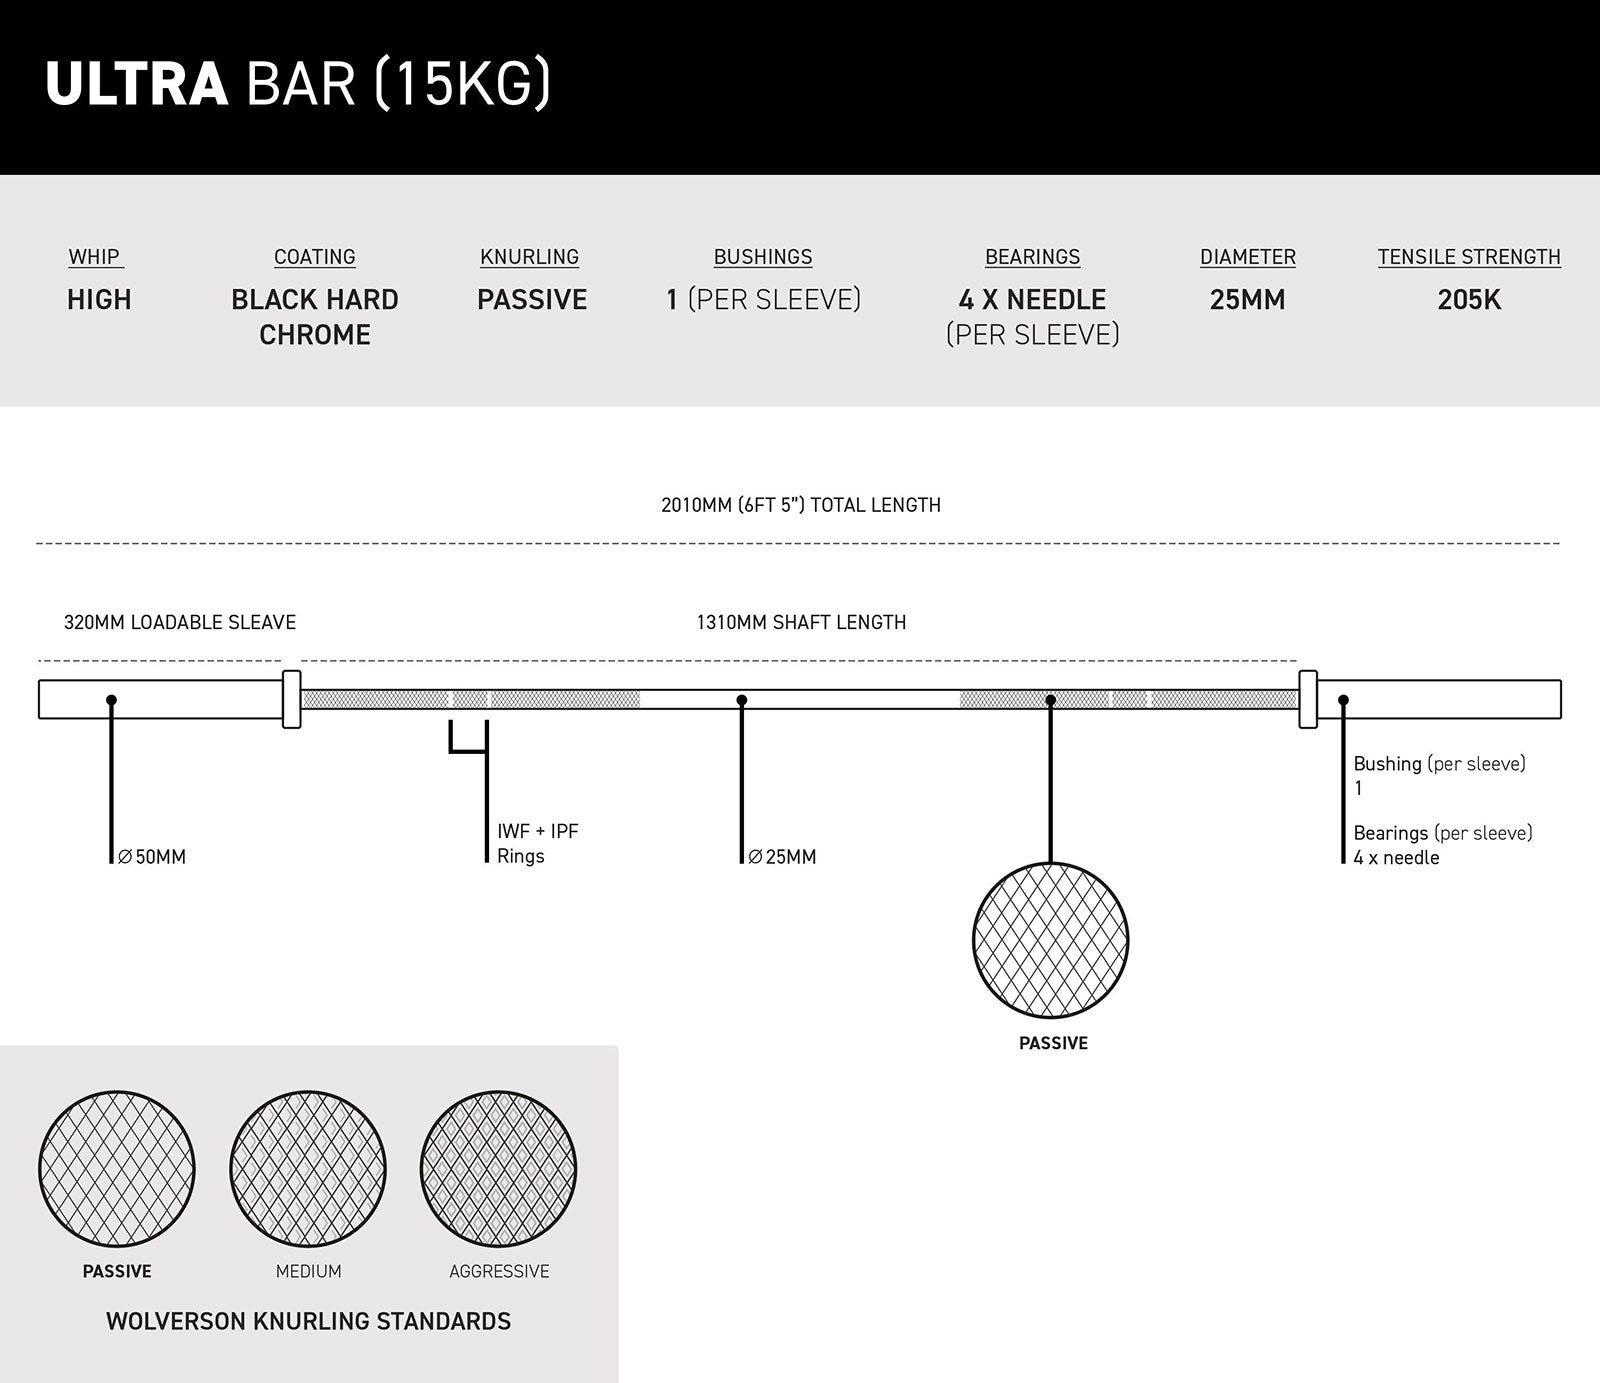 The Ultra Bar - 15kg